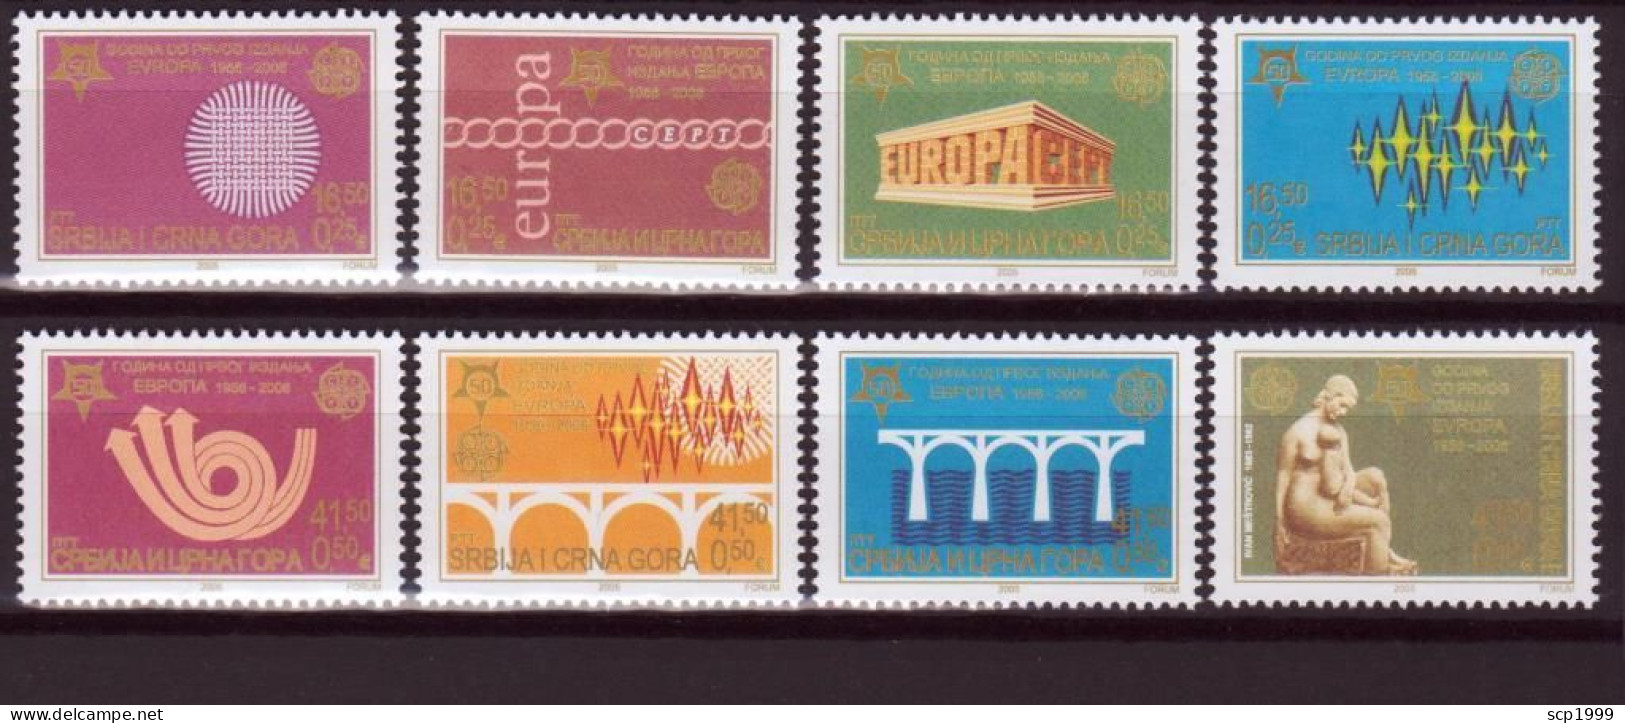 Serbia 2006 - Europa 50 Years Stamps Set MNH - Serbia